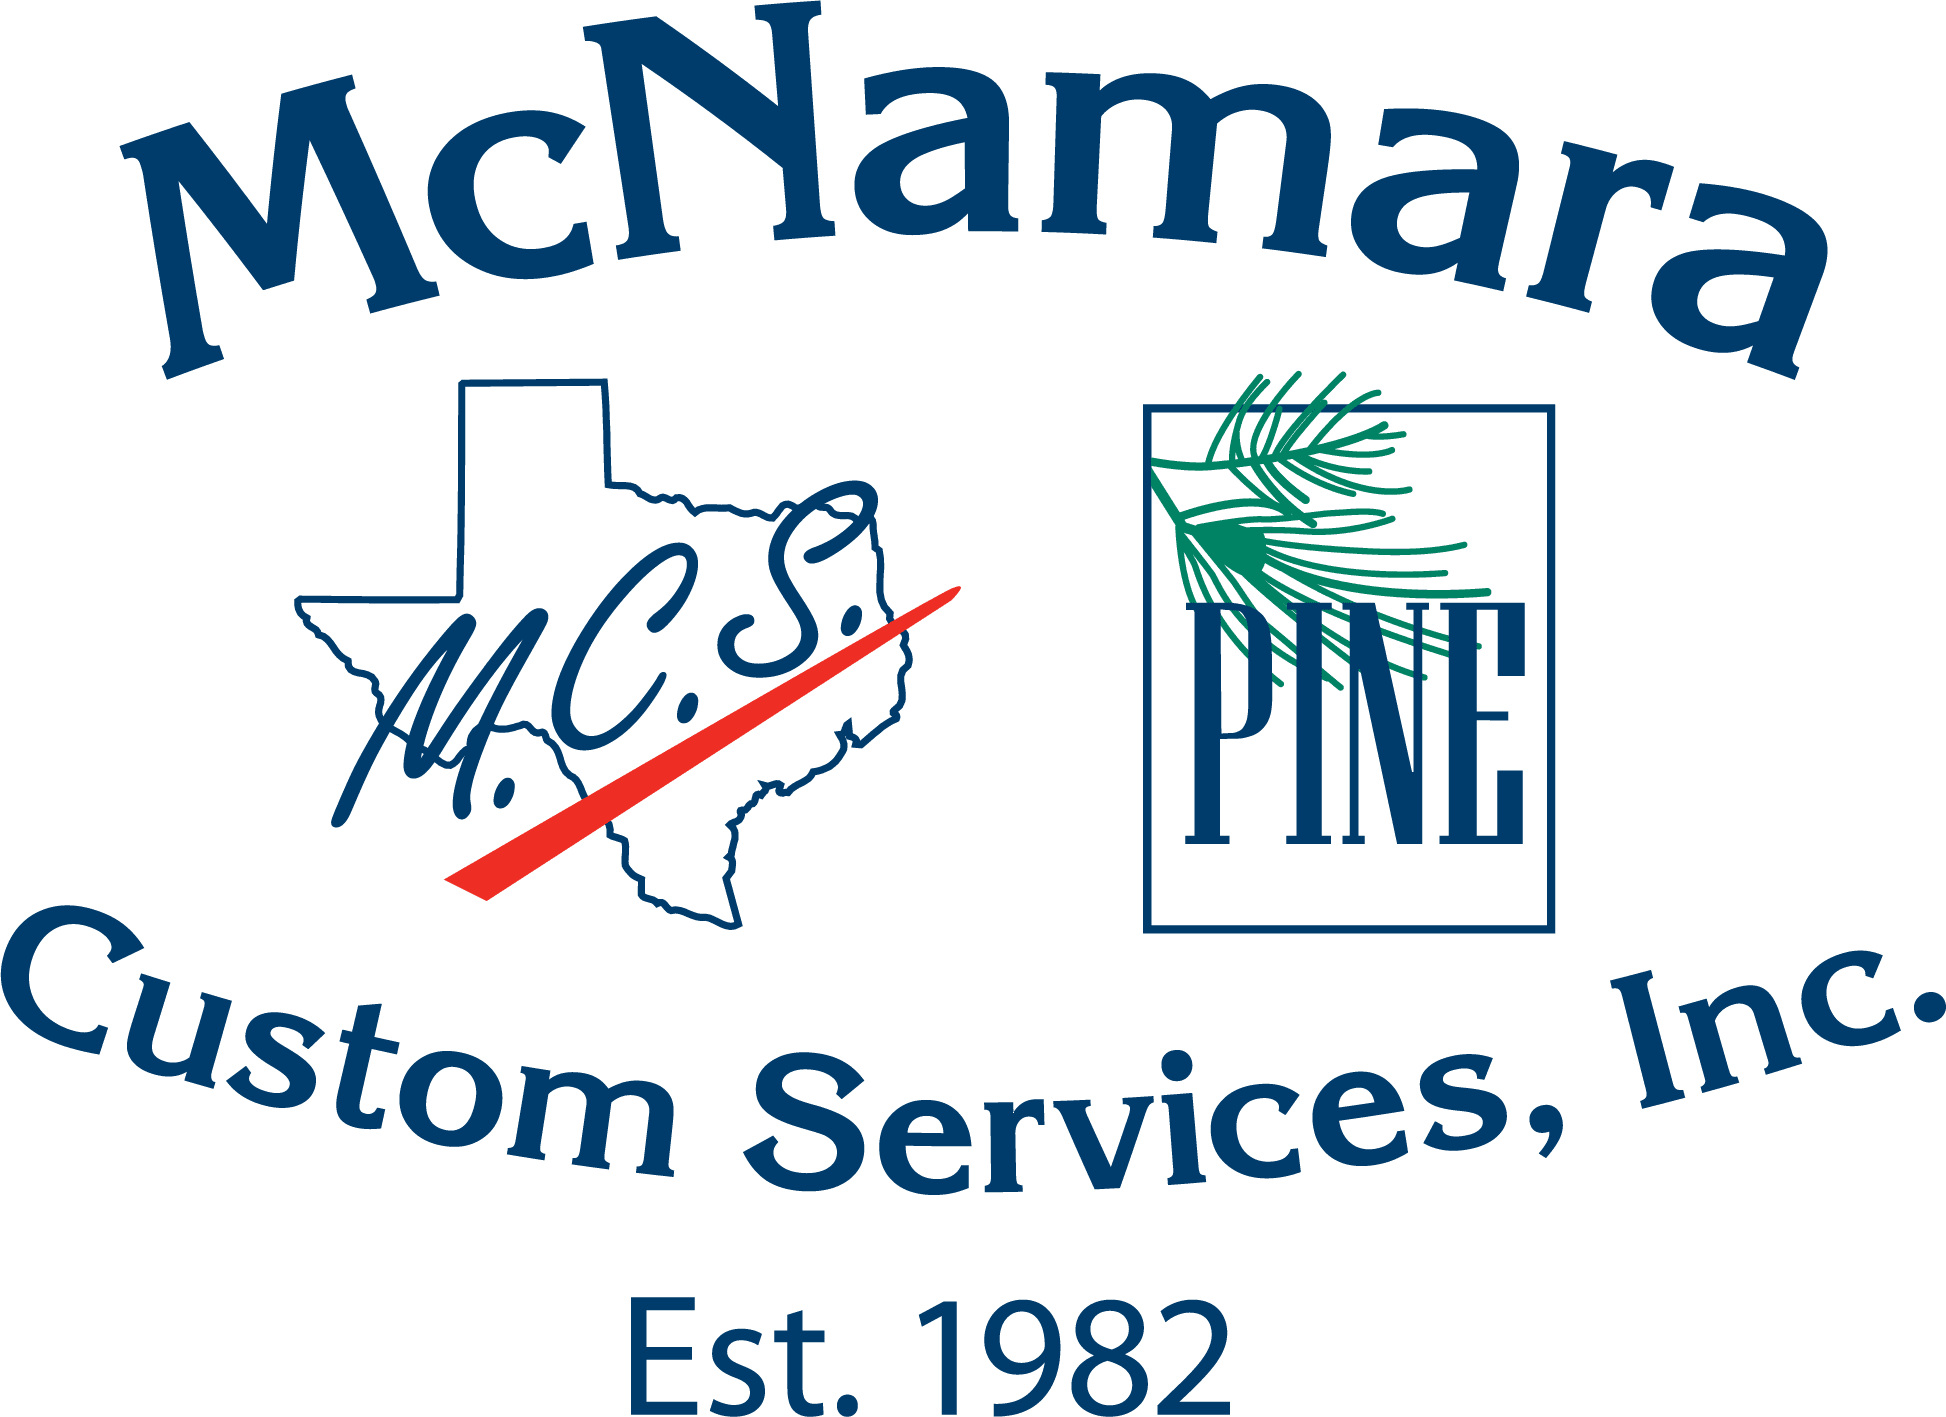 McNamara Custom Services, Inc Waco, Texas